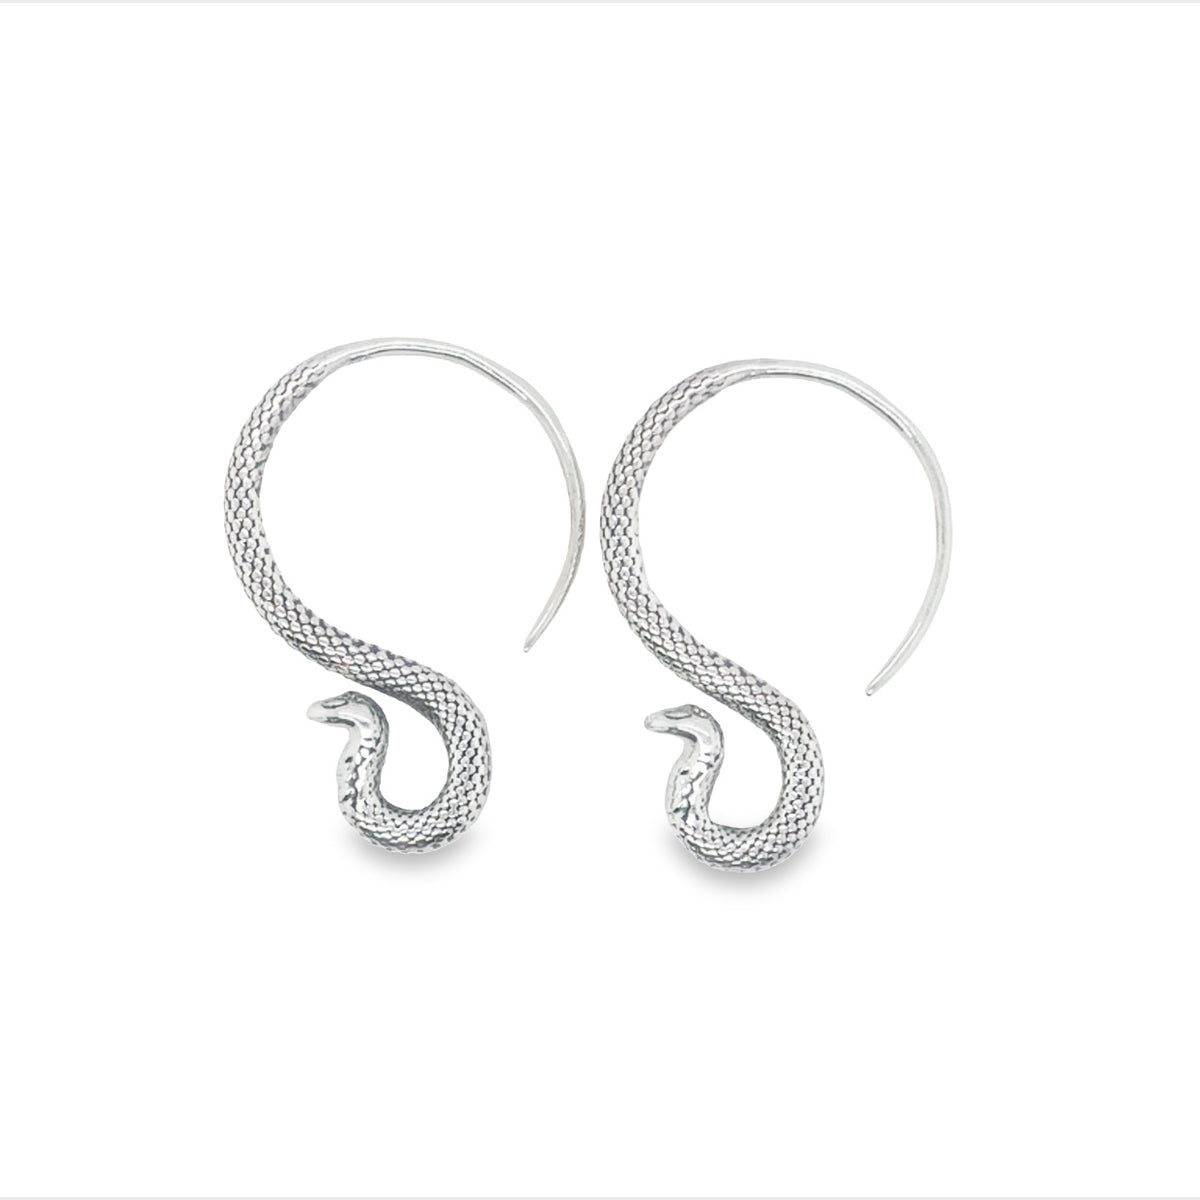 Onatah Sterling Silver Fixed Hook Snake Earrings